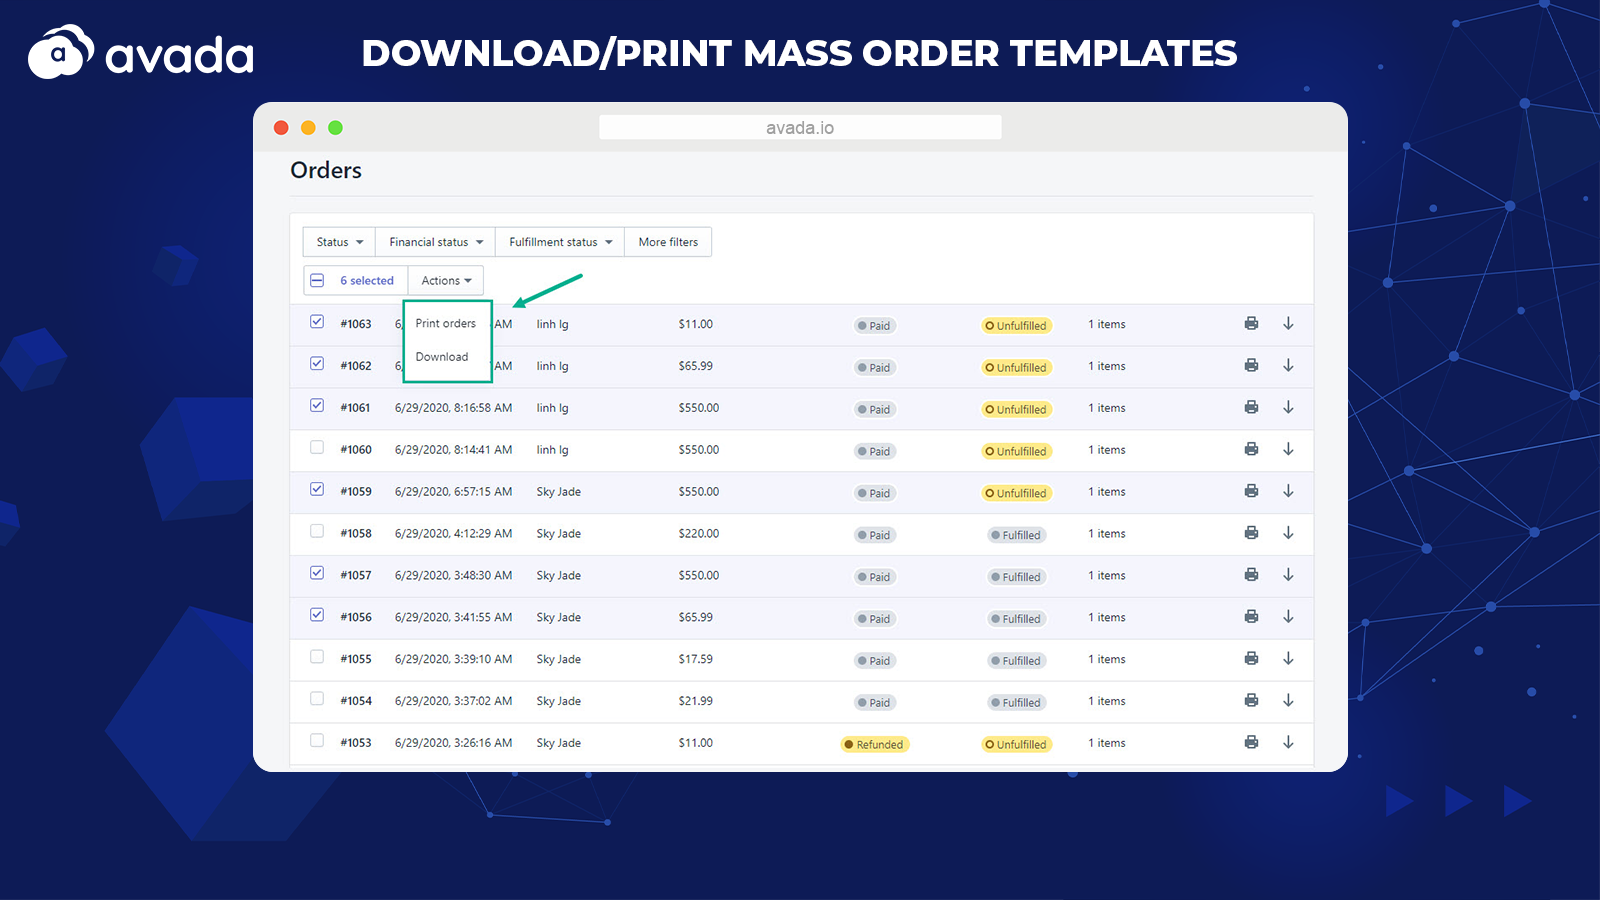 Download/print mass order templates